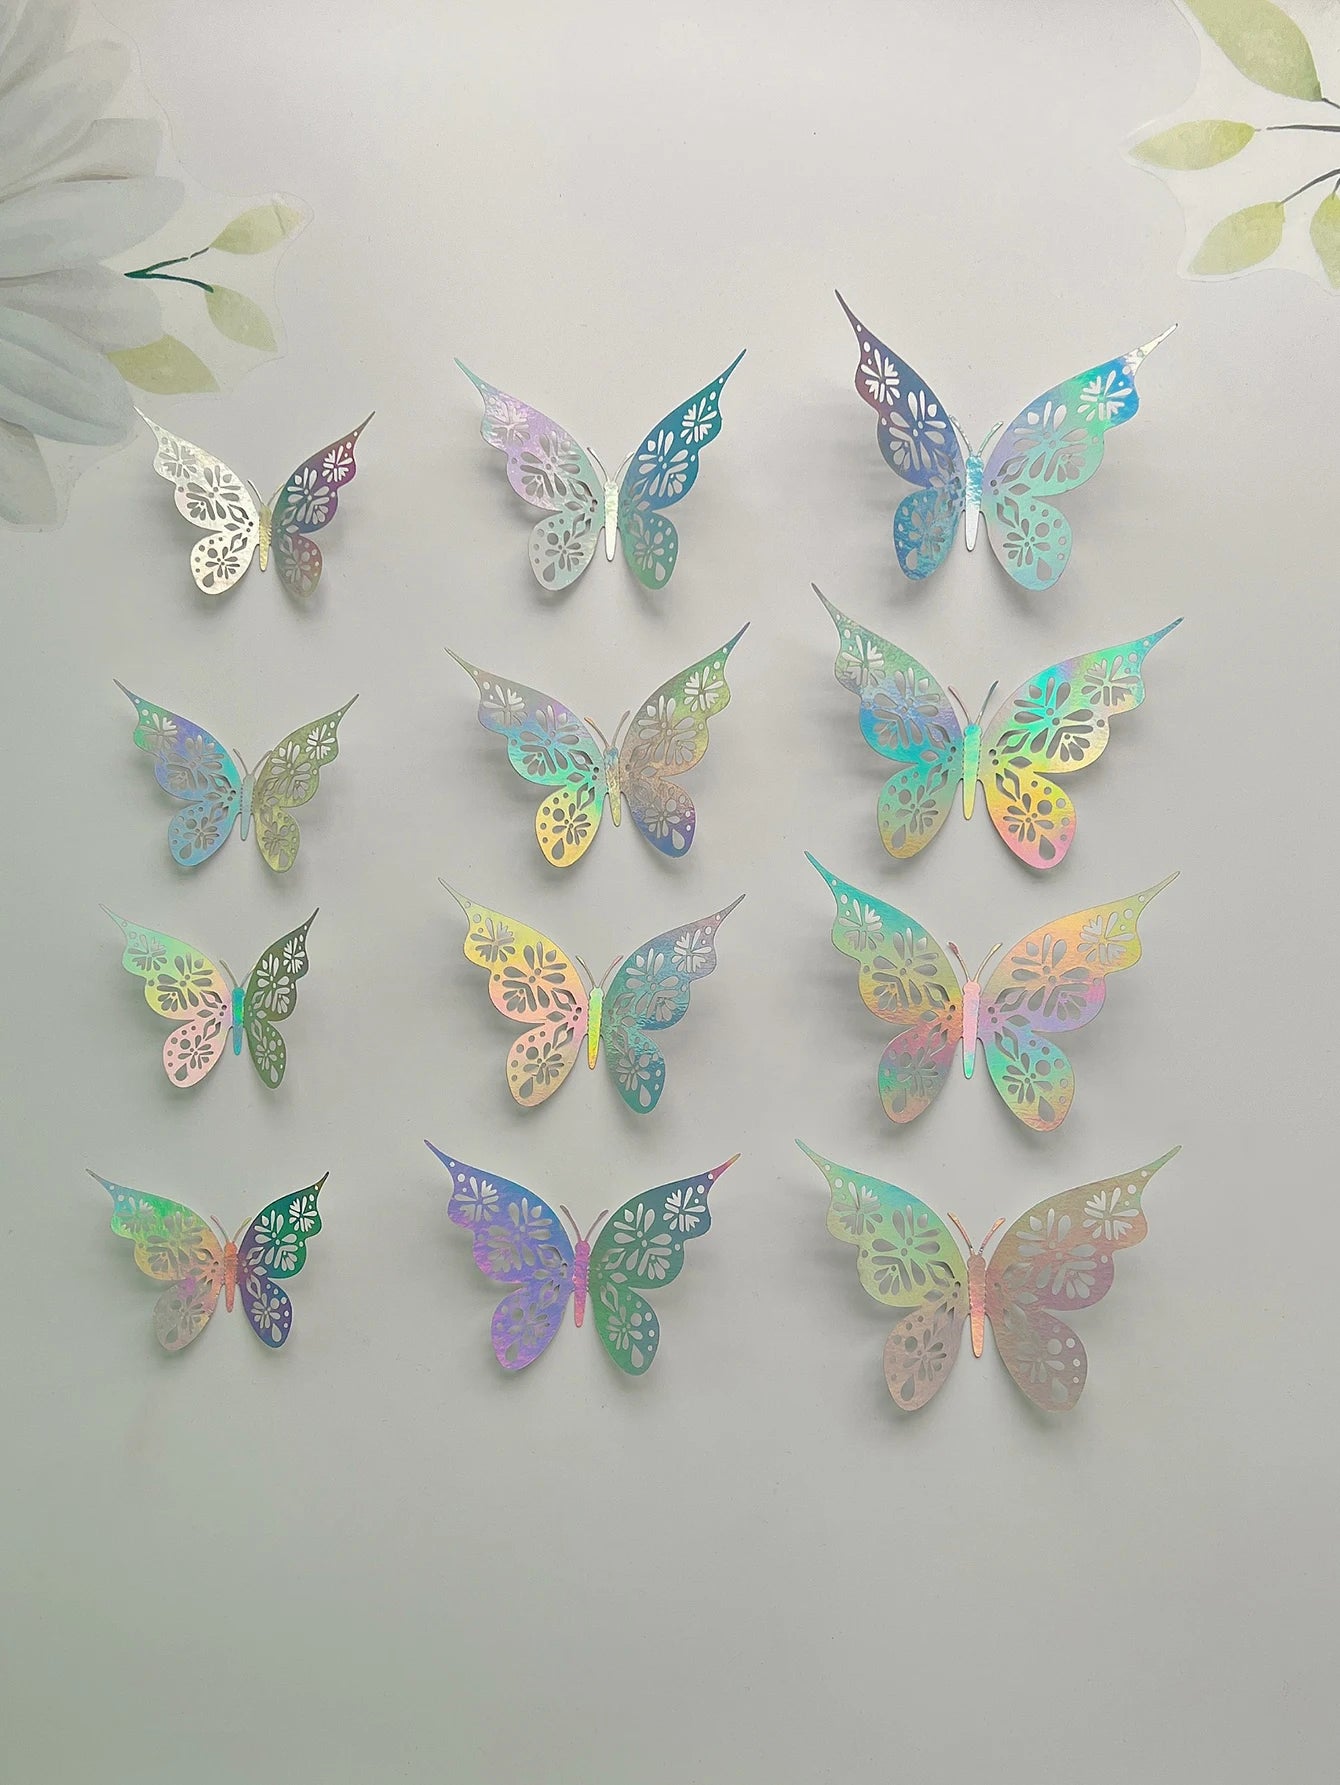 3D-Wandpapieraufkleber mit hohlem Schmetterling